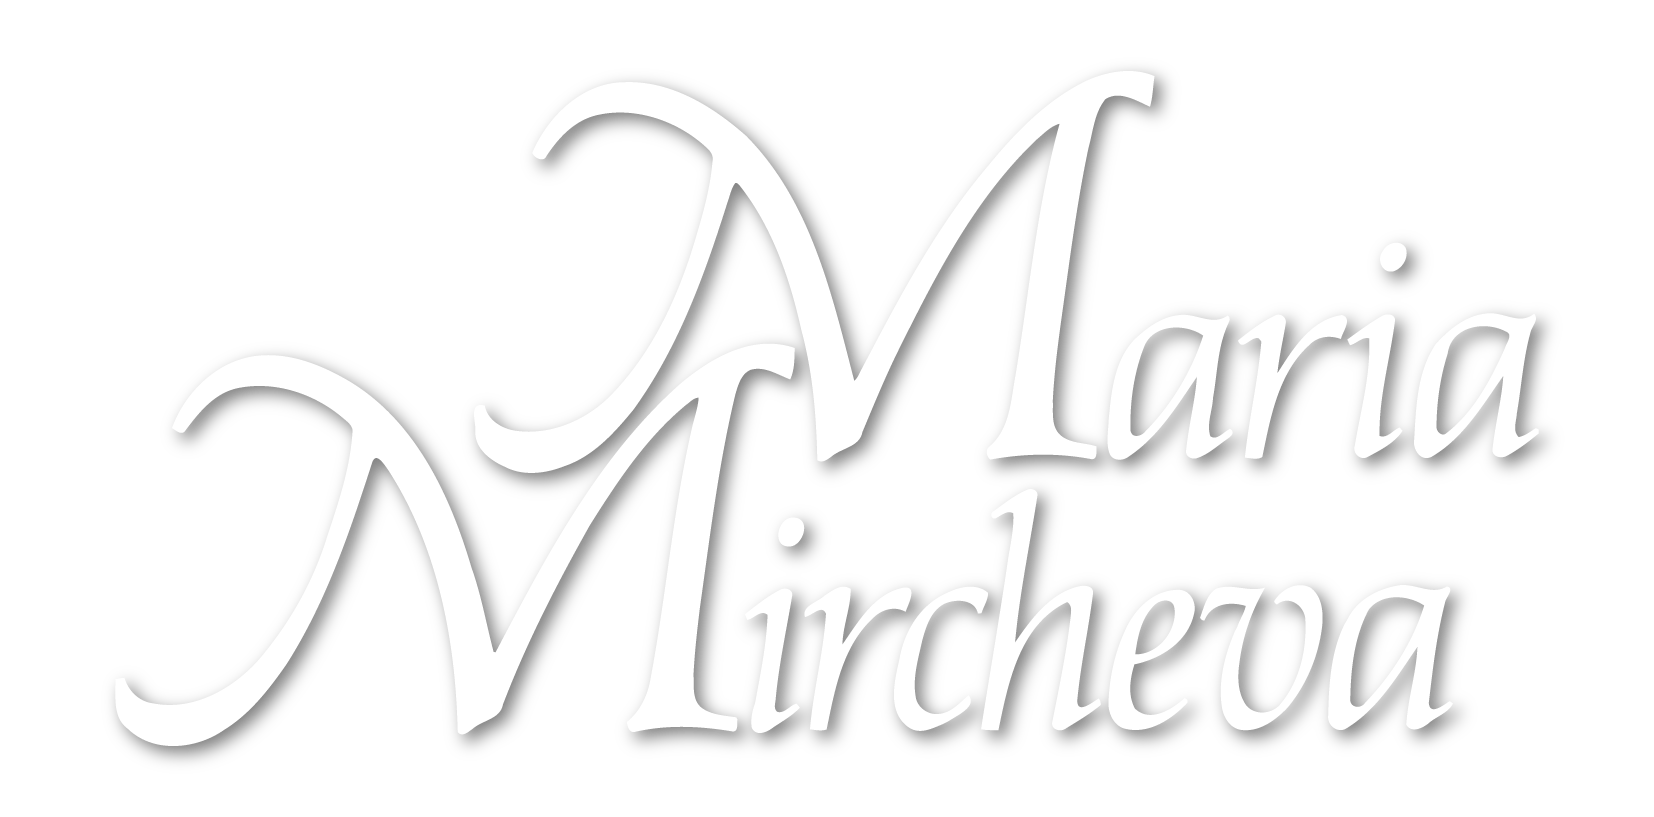 maria mircheva logo